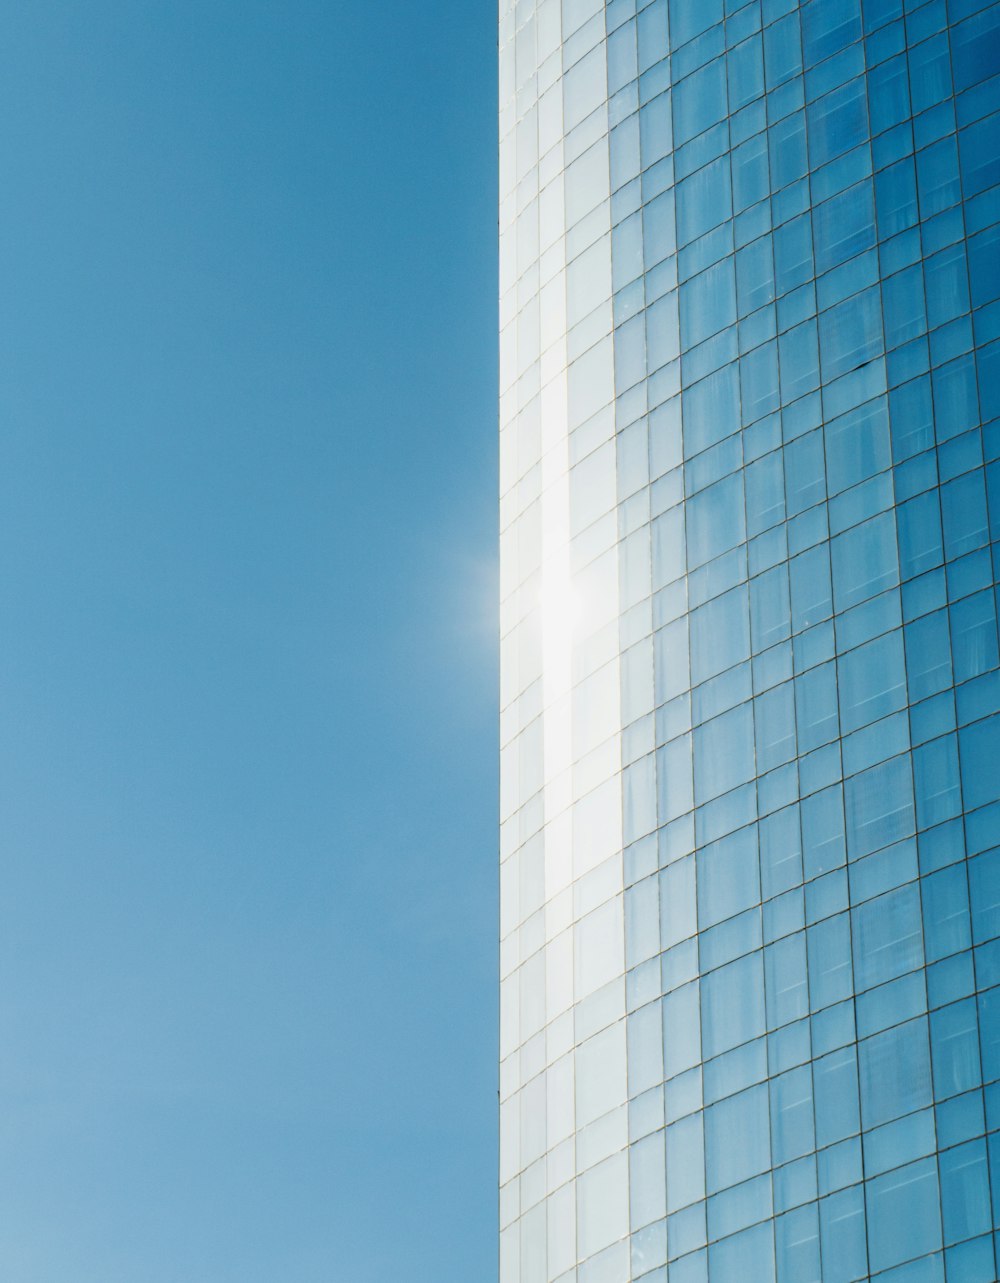 Fotografía de edificios de vidrio azul